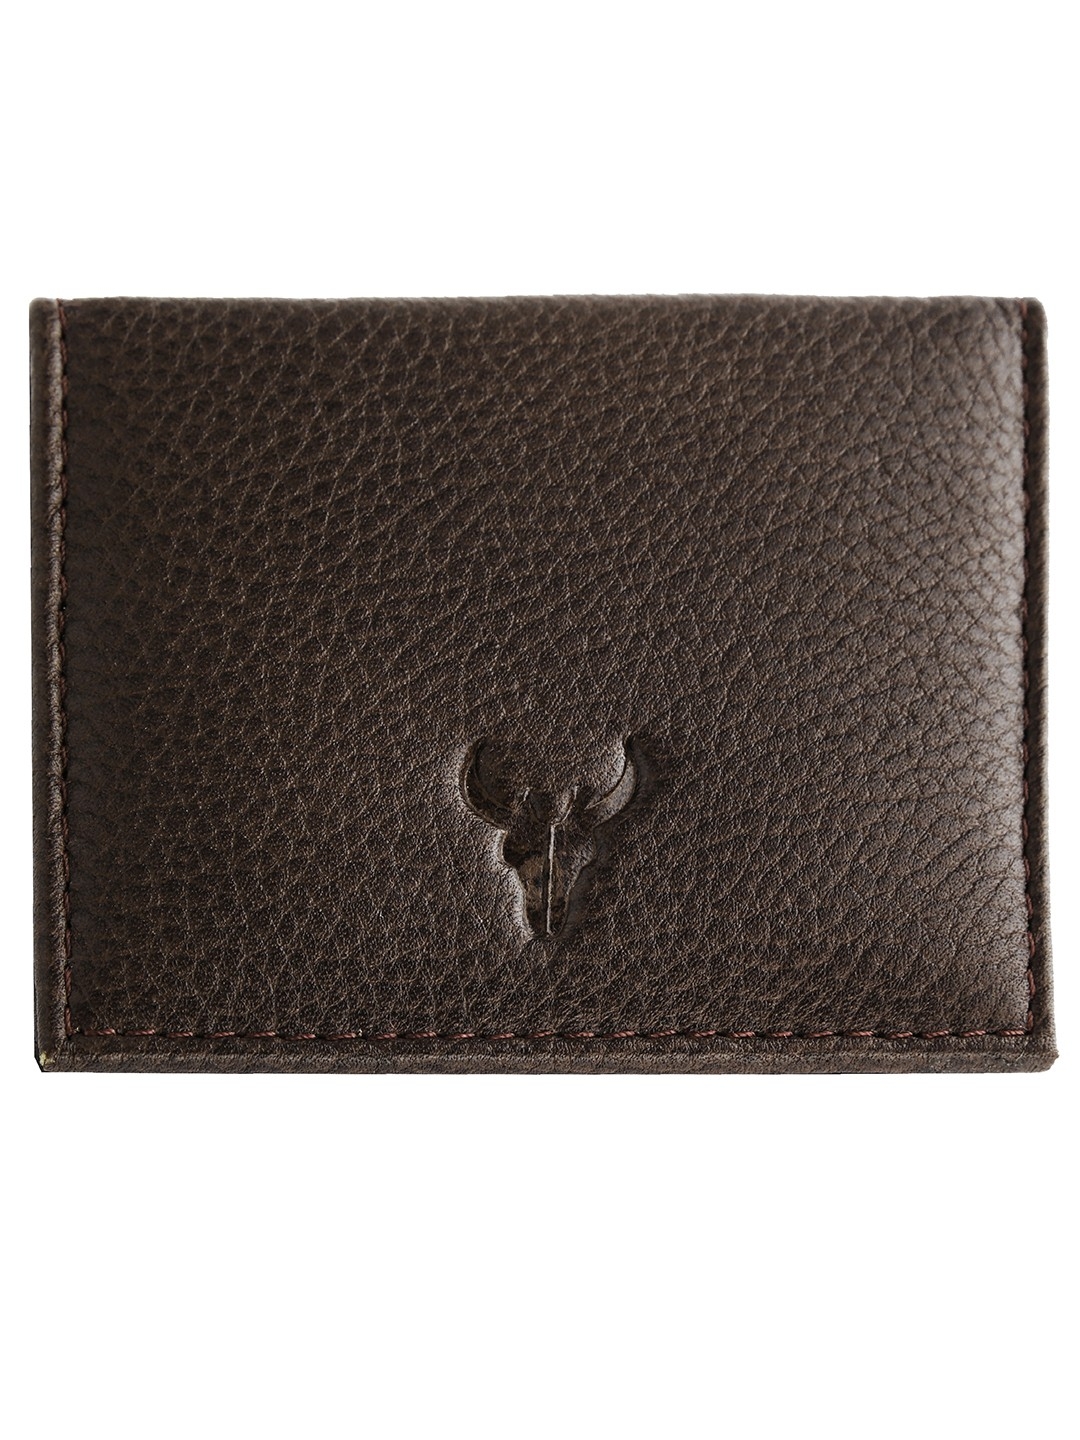 Napa Hide | Napa Hide RFID Protected Genuine High Quality Leather Dark Brown Wallet for Men